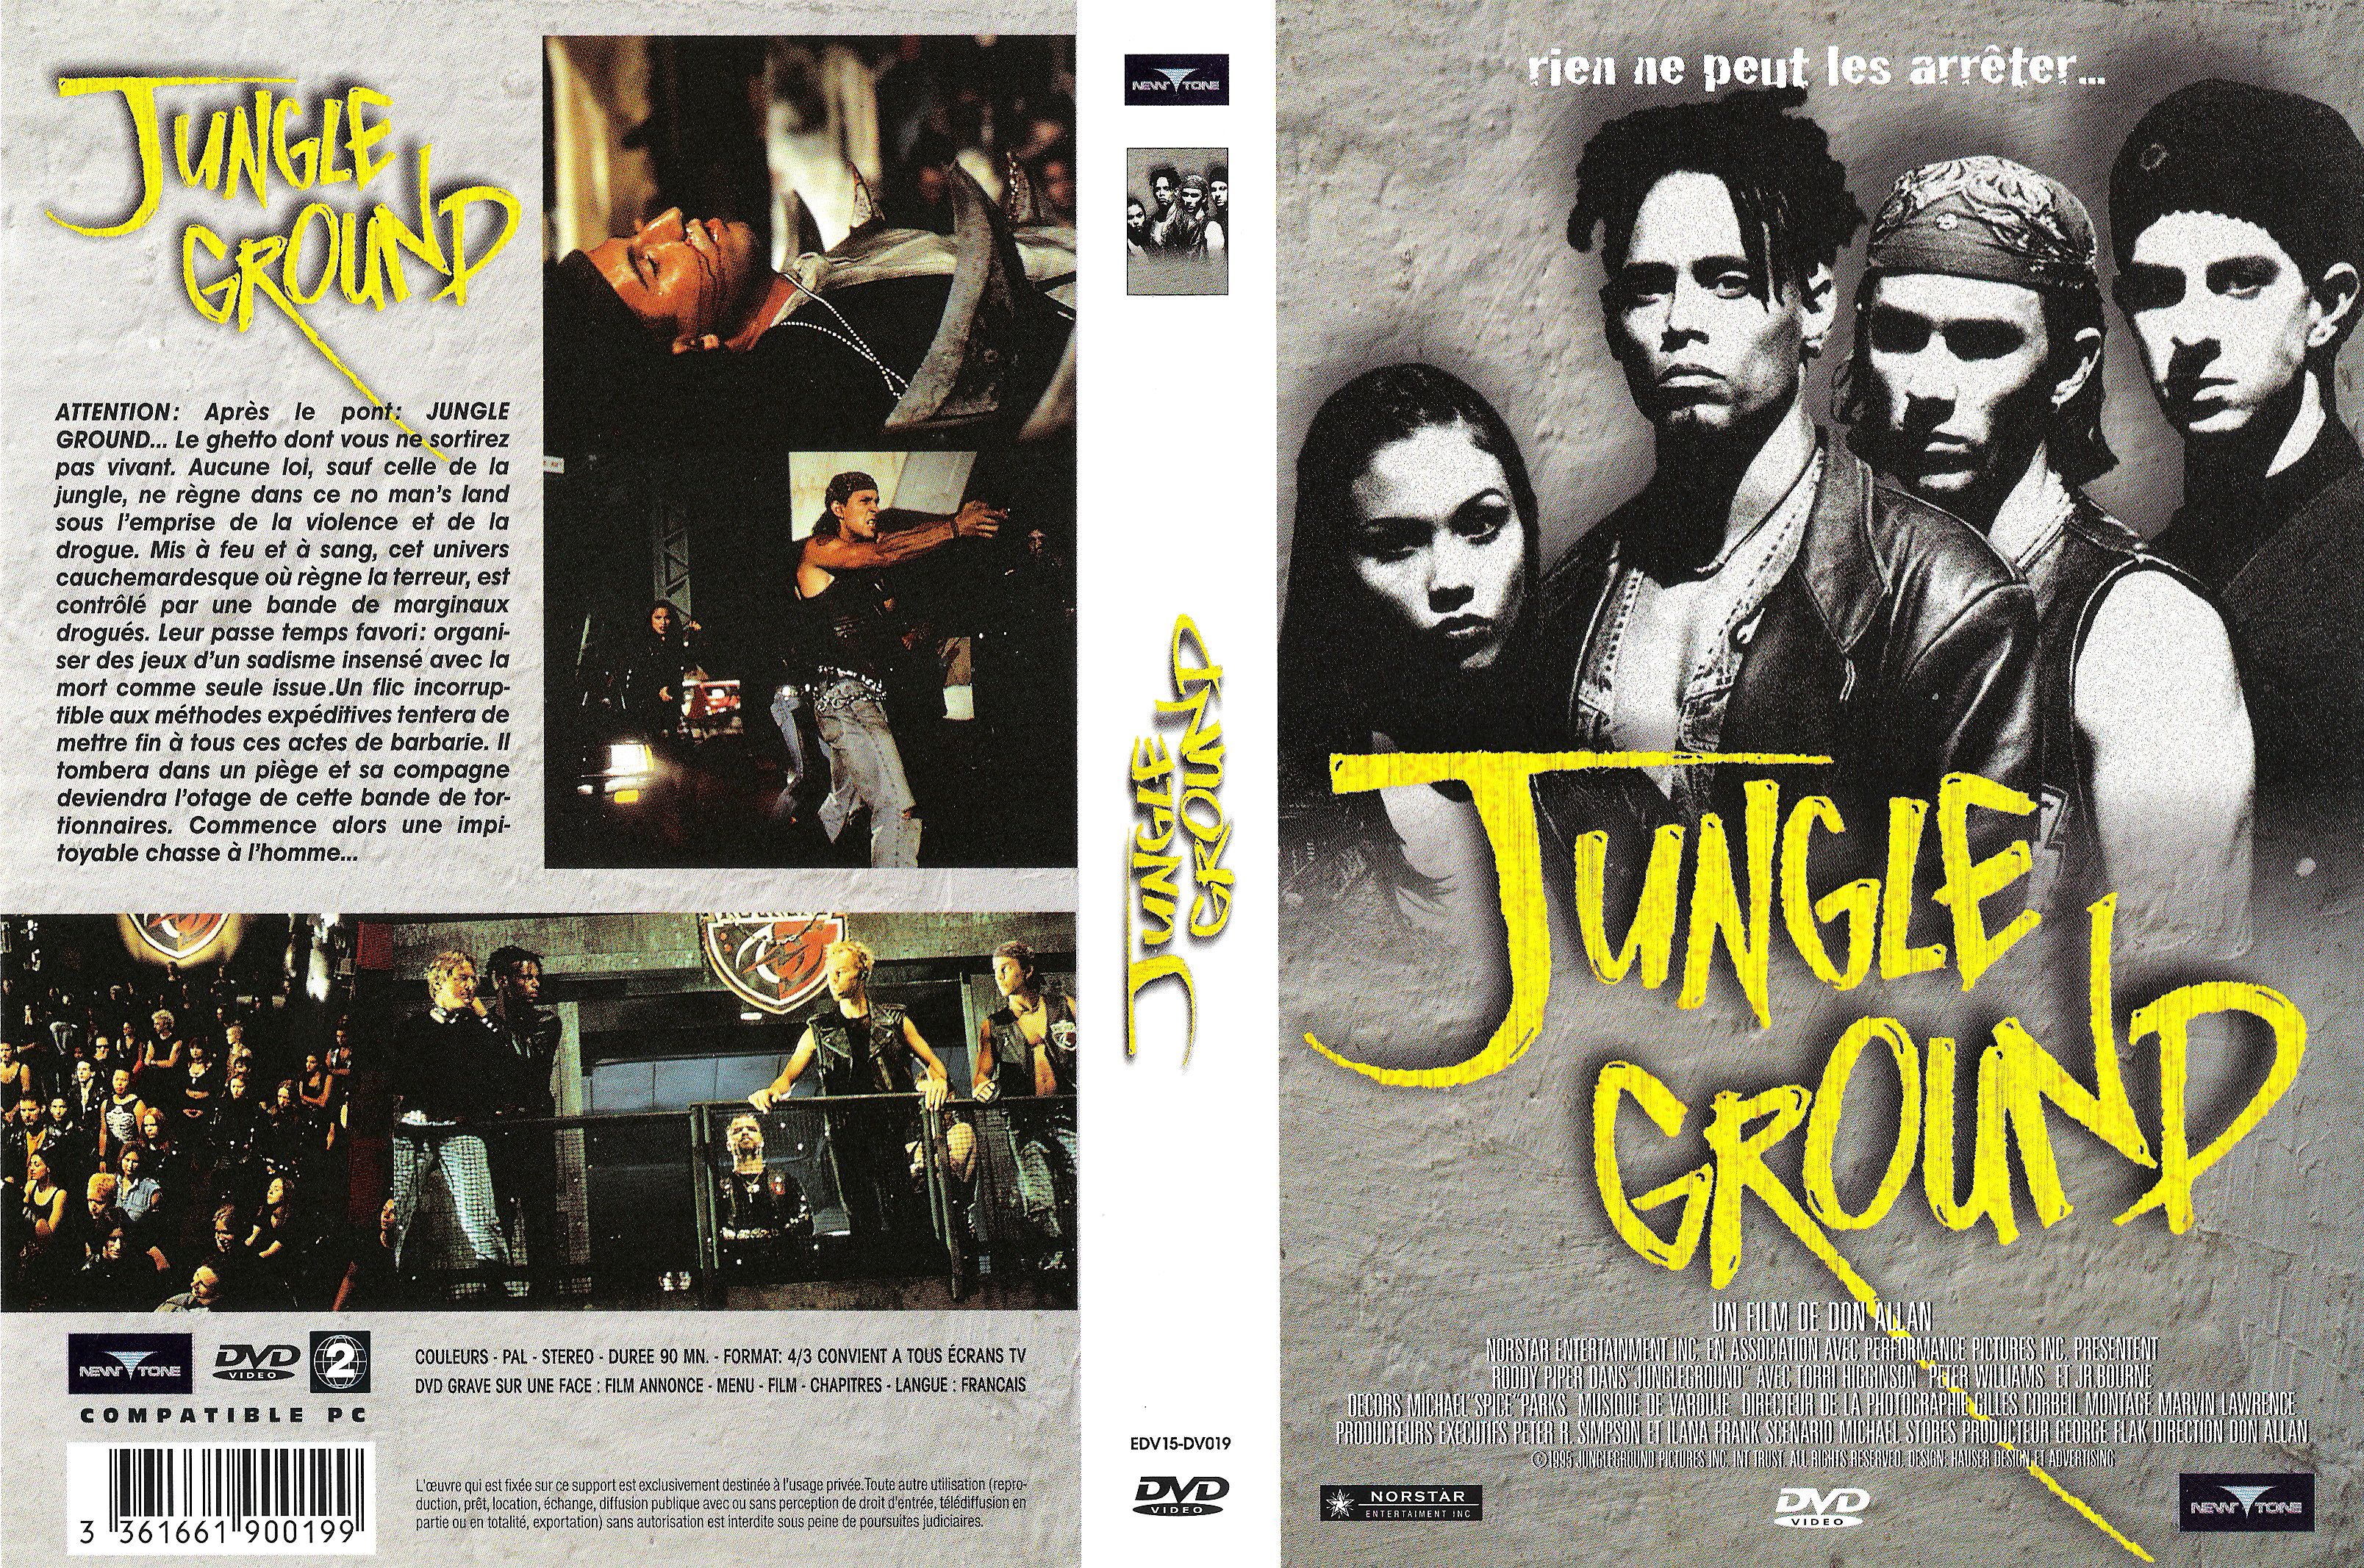 Jaquette DVD Jungle ground v2